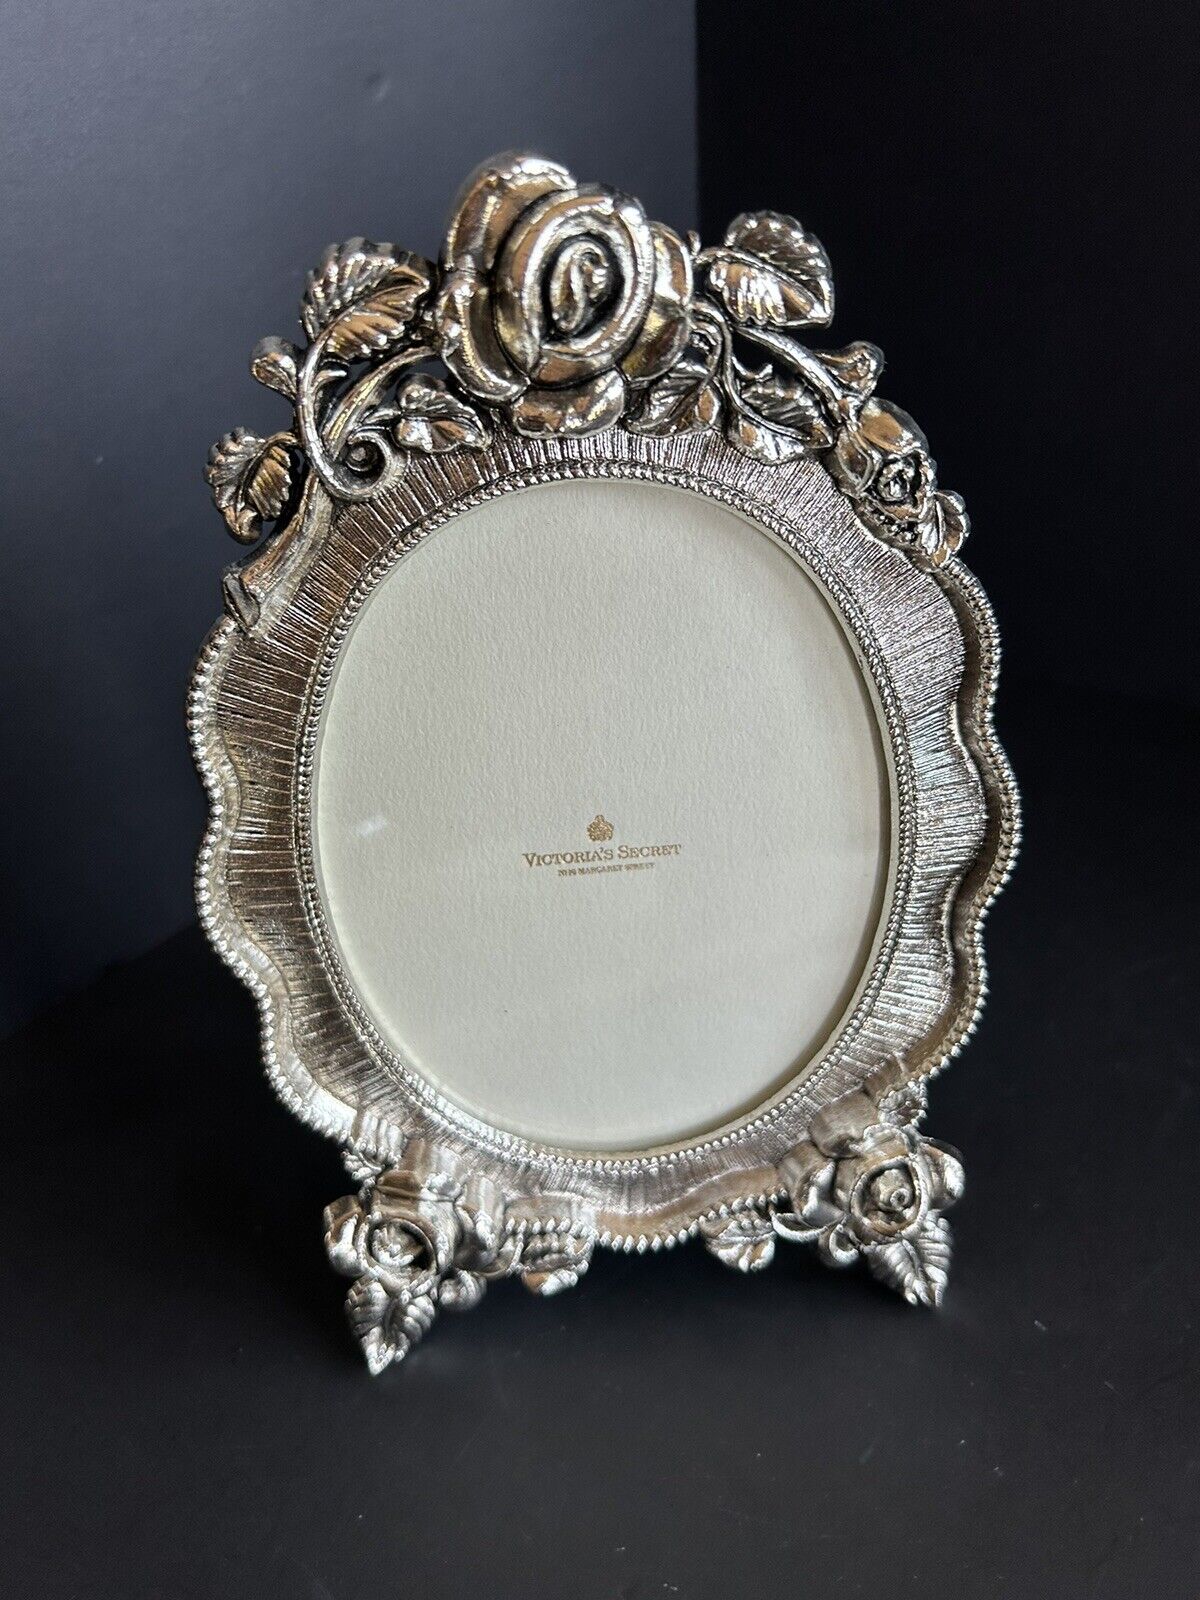 Victoria’s Secret Margaret Street Oval Frame Silver Roses For 4”x5” Photo